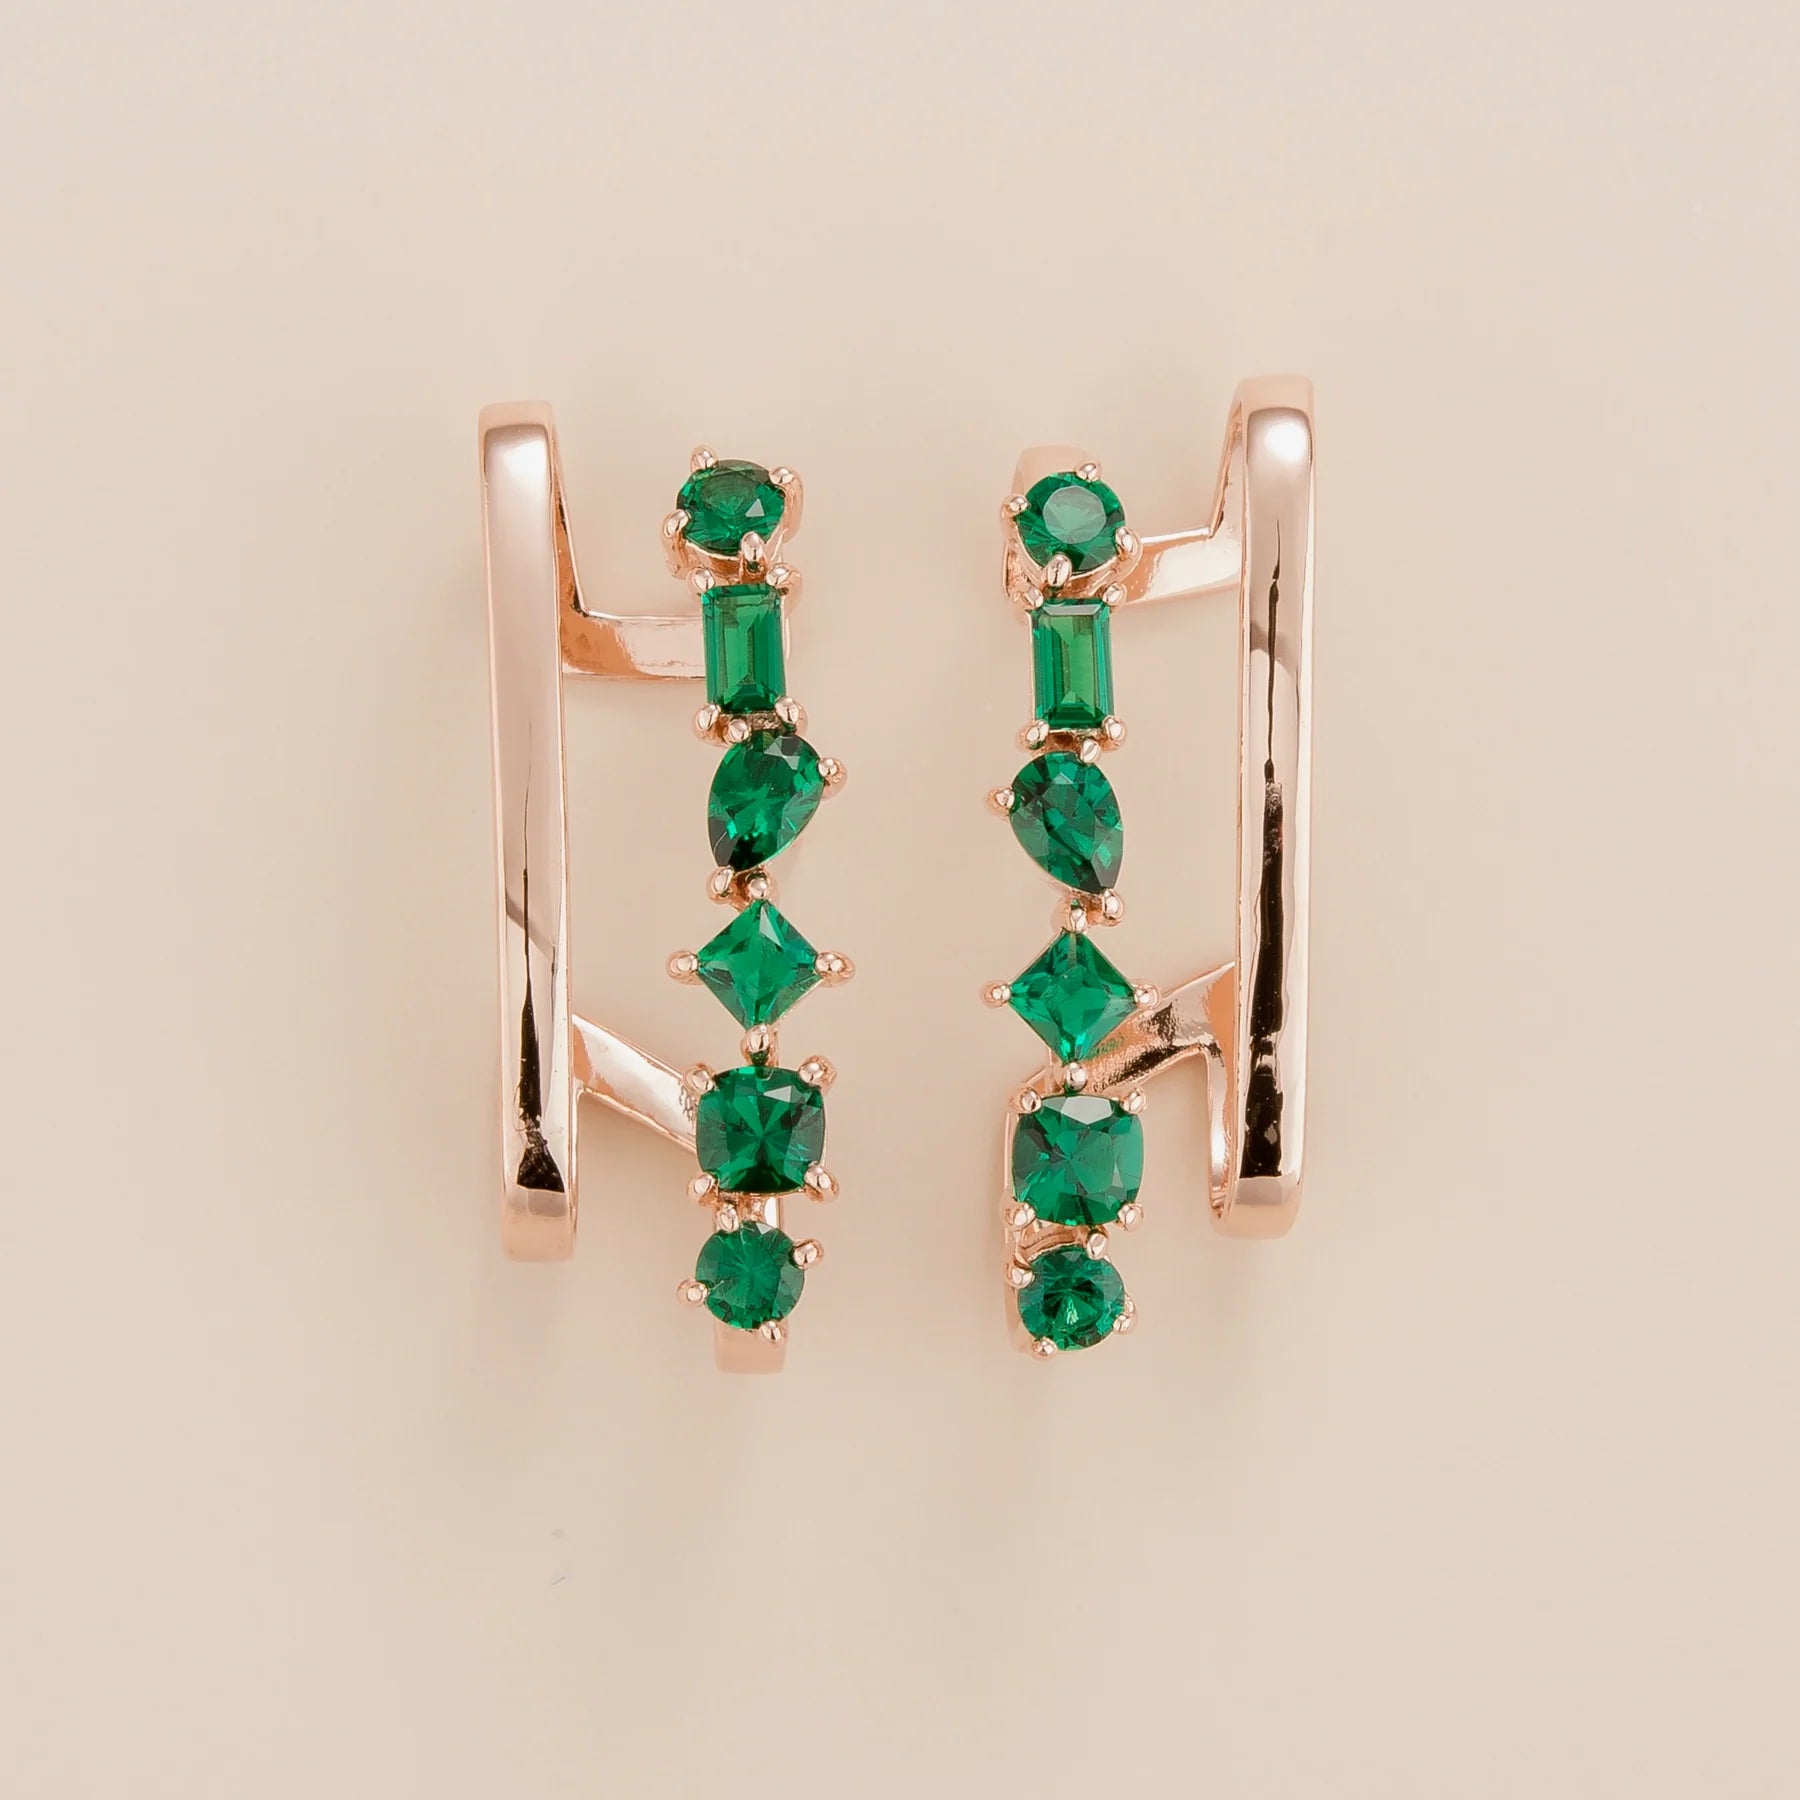 Buy Online Serene Rose Gold Earrings Set With Emerald Bespoke Jewellery Juvetti From London